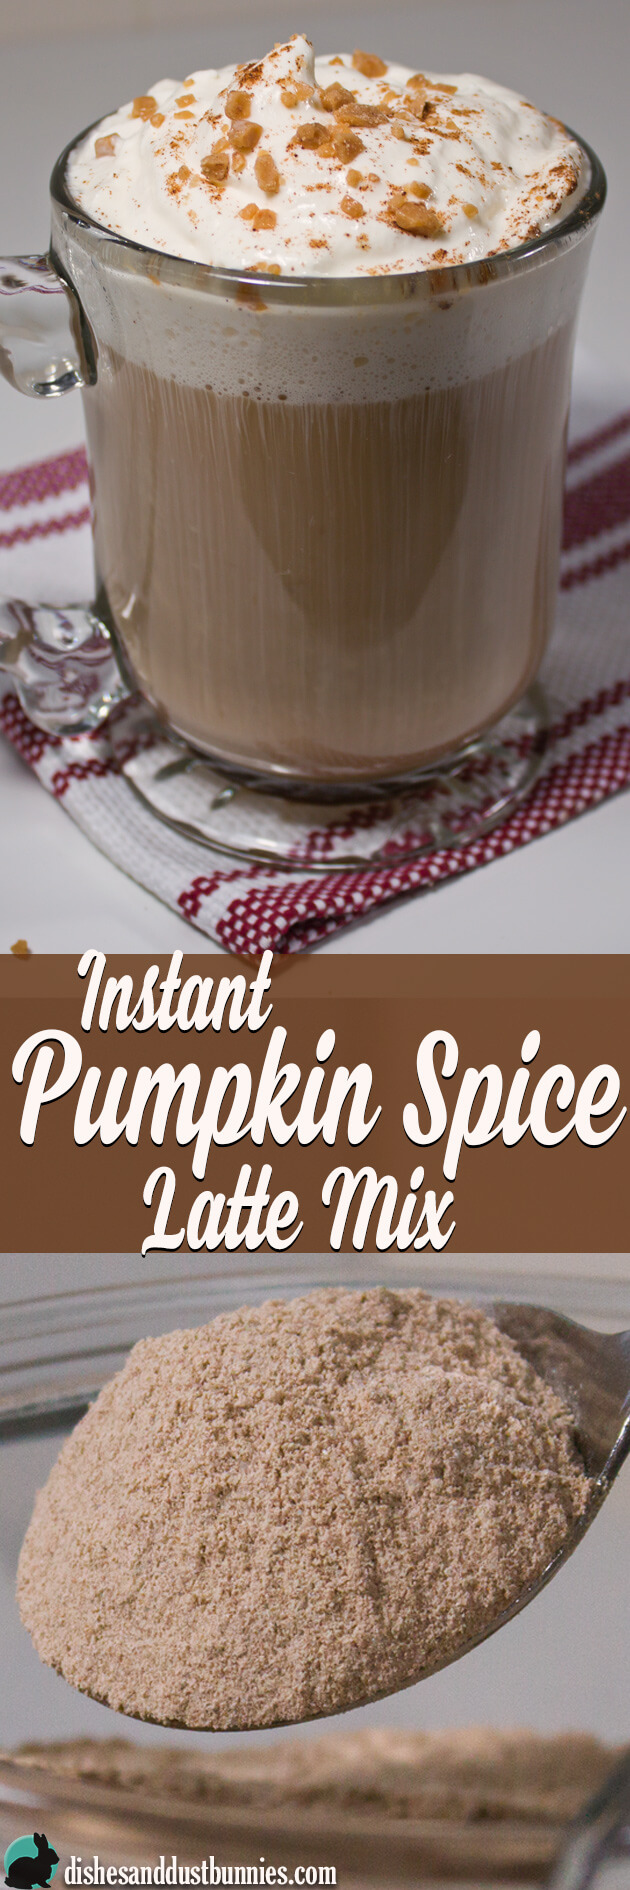 Homemade DIY Instant Pumpkin Spice Latte Mix from dishesanddustbunnies.com